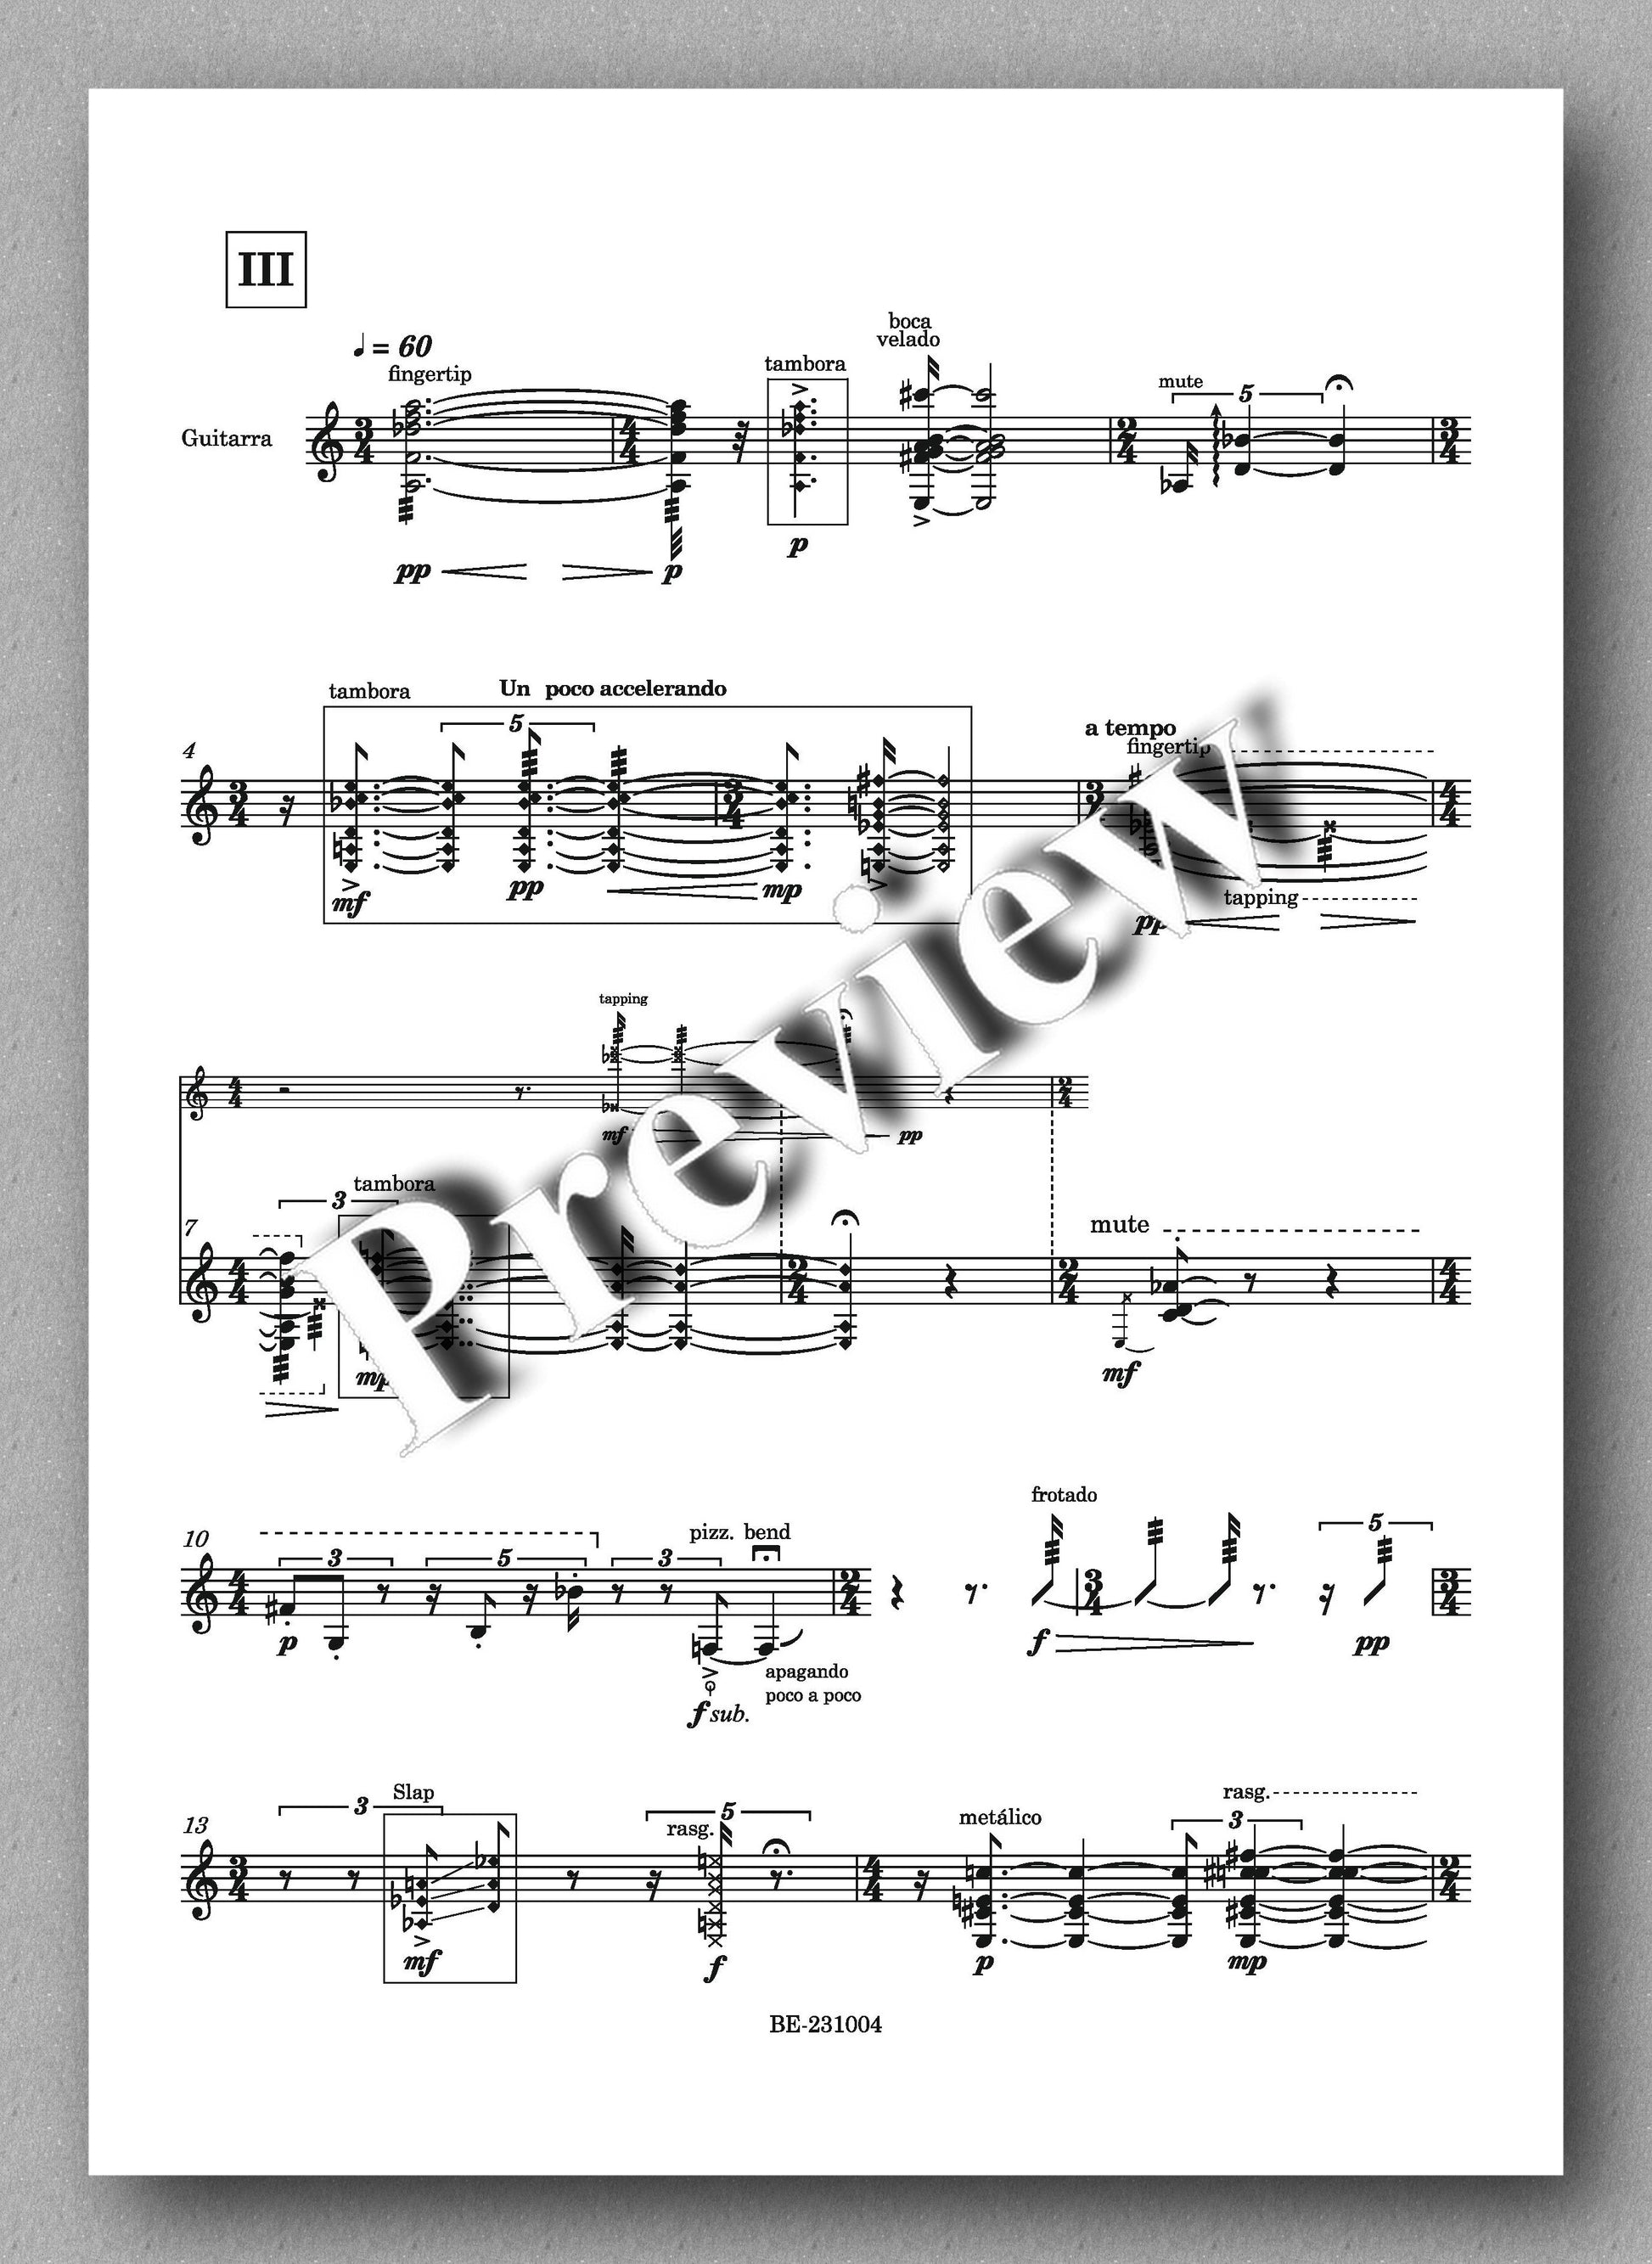 José Baroni, Miniaturas - preview of the music score 3